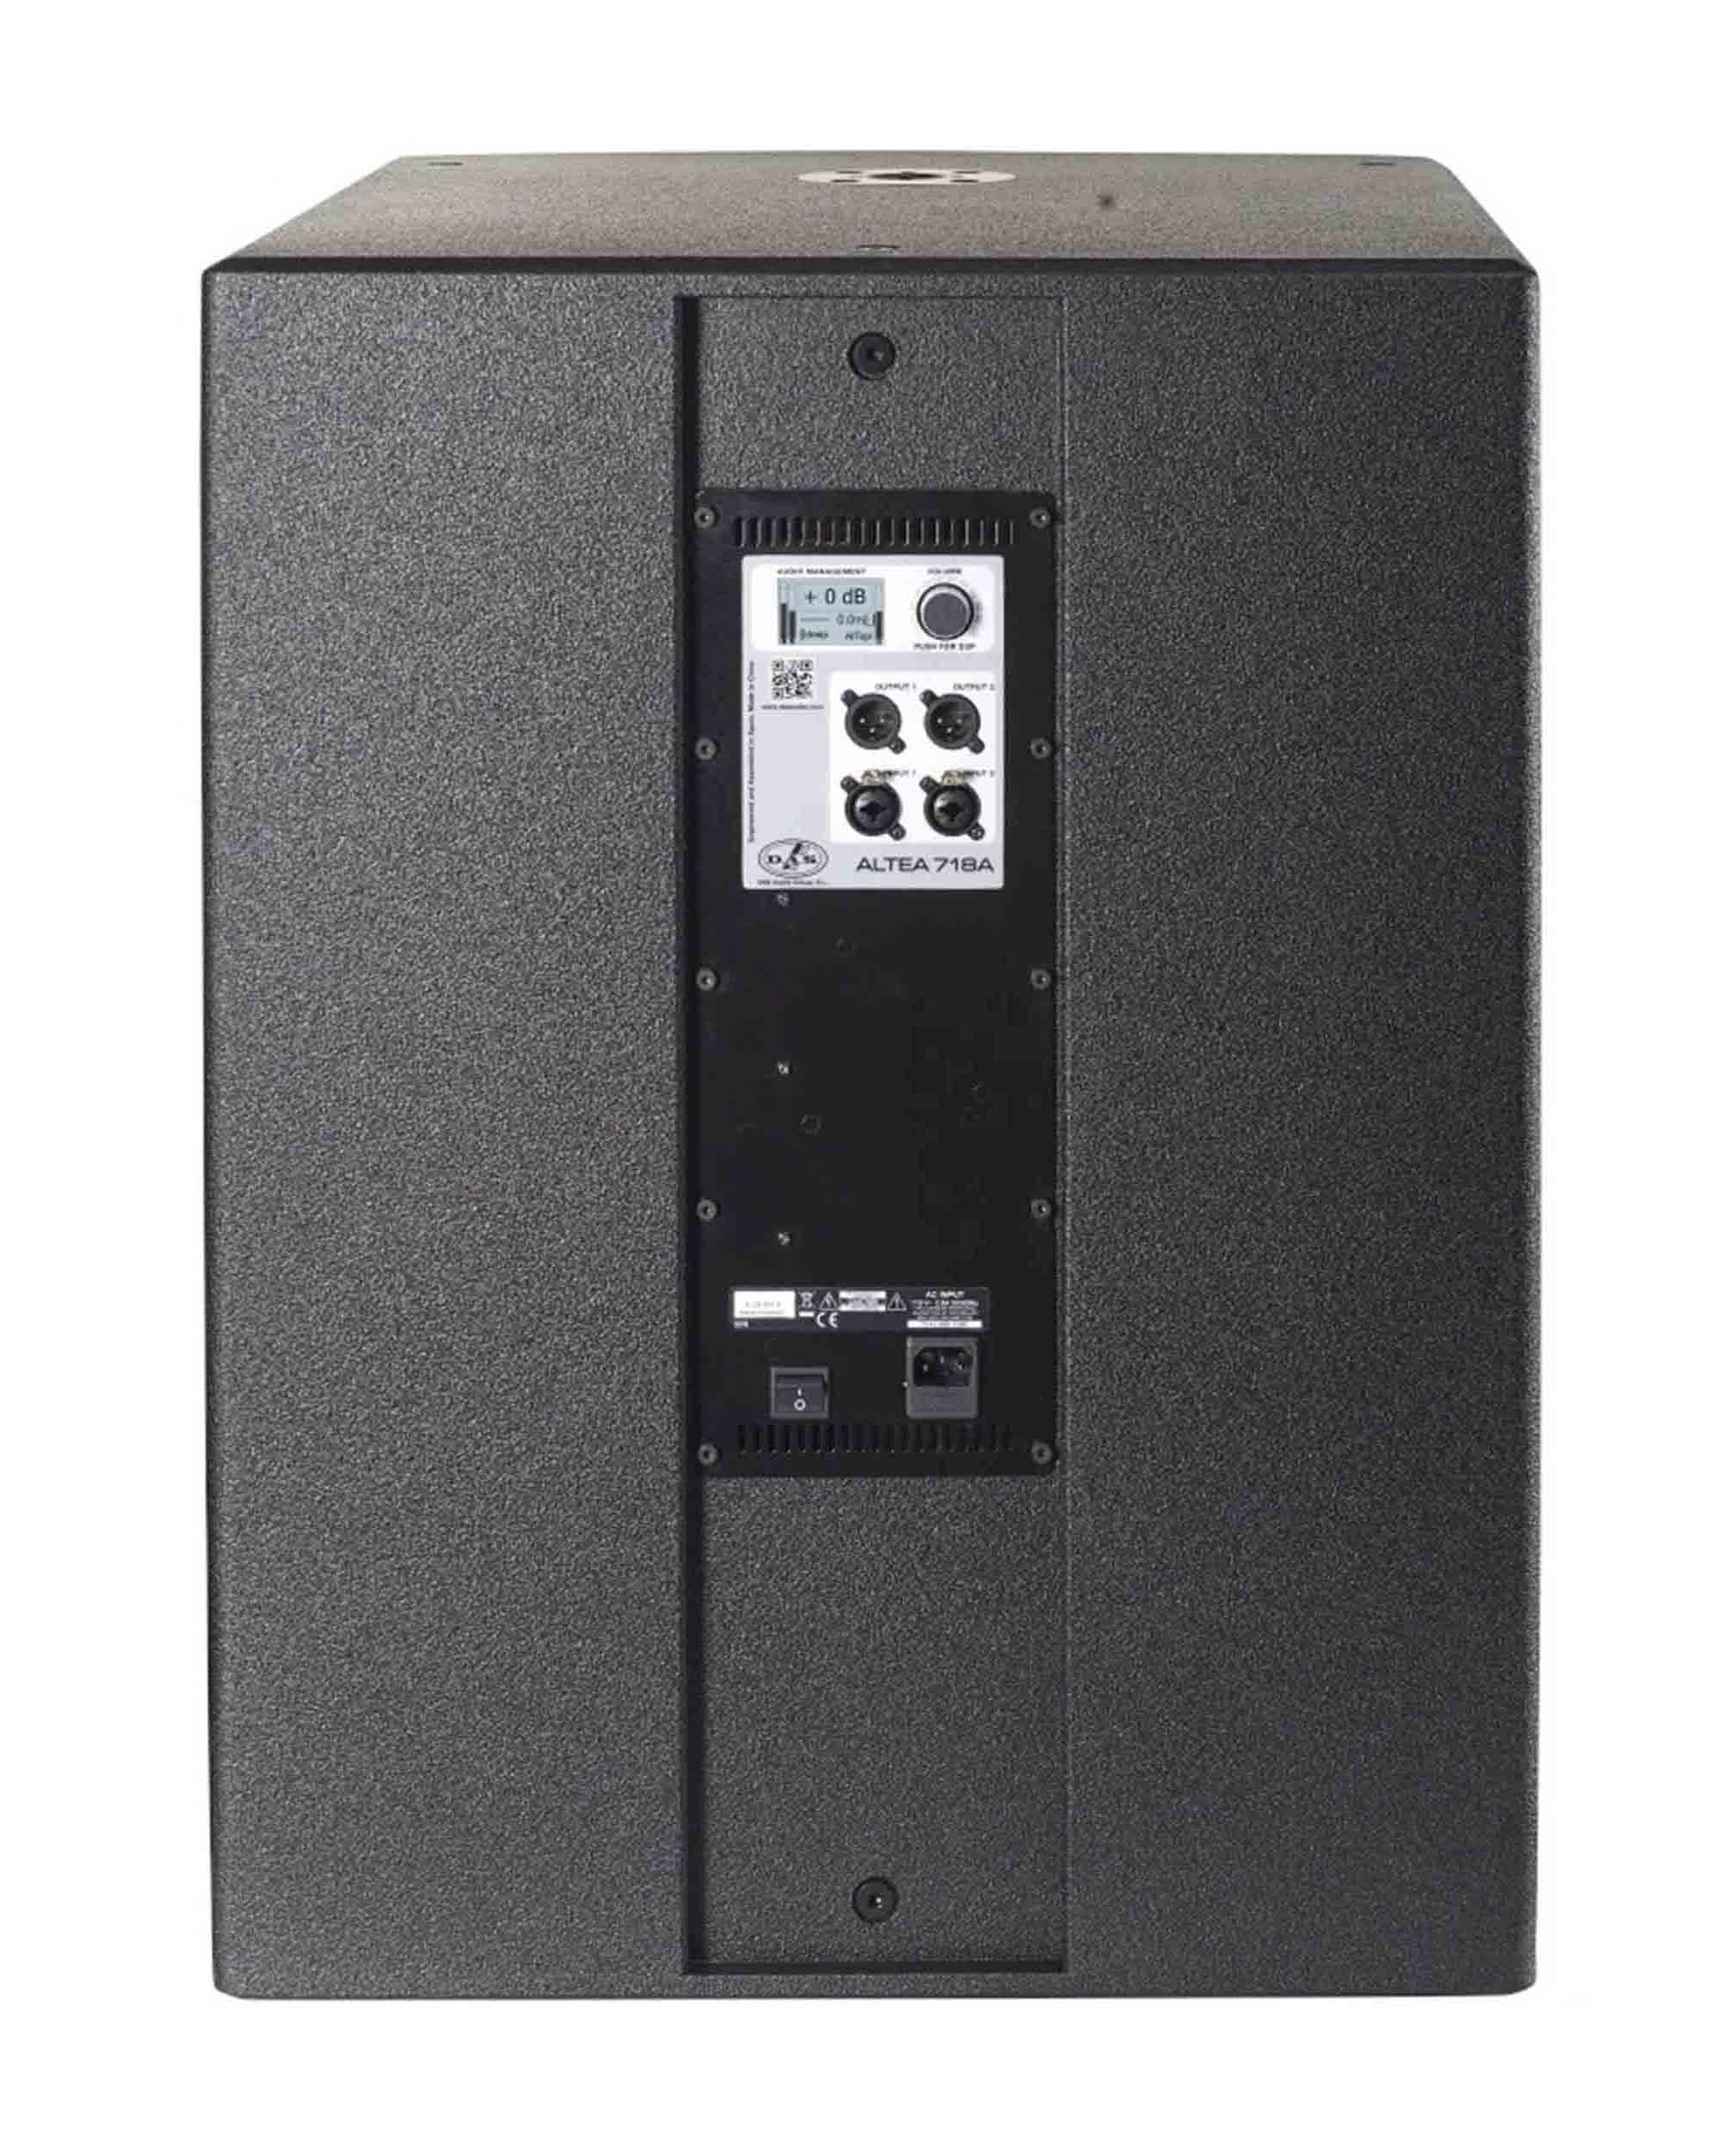 DAS Audio 712ACVR12718ATSP1, 12-Inch Powered Speaker DJ Package with Subs by DAS Audio